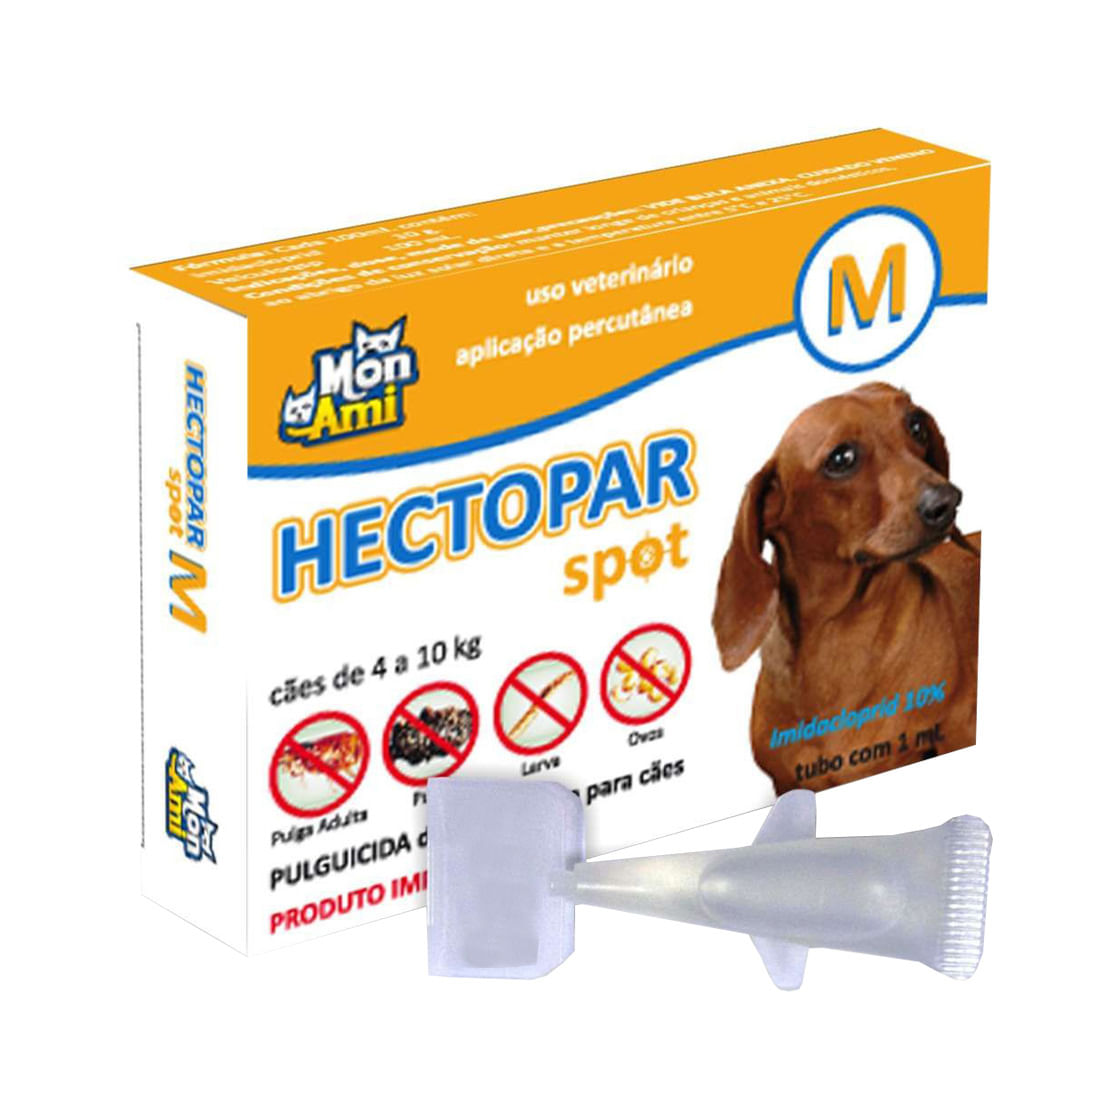 Antipulgas Hectopar Spot 1ml Cães de 4 a 10kg